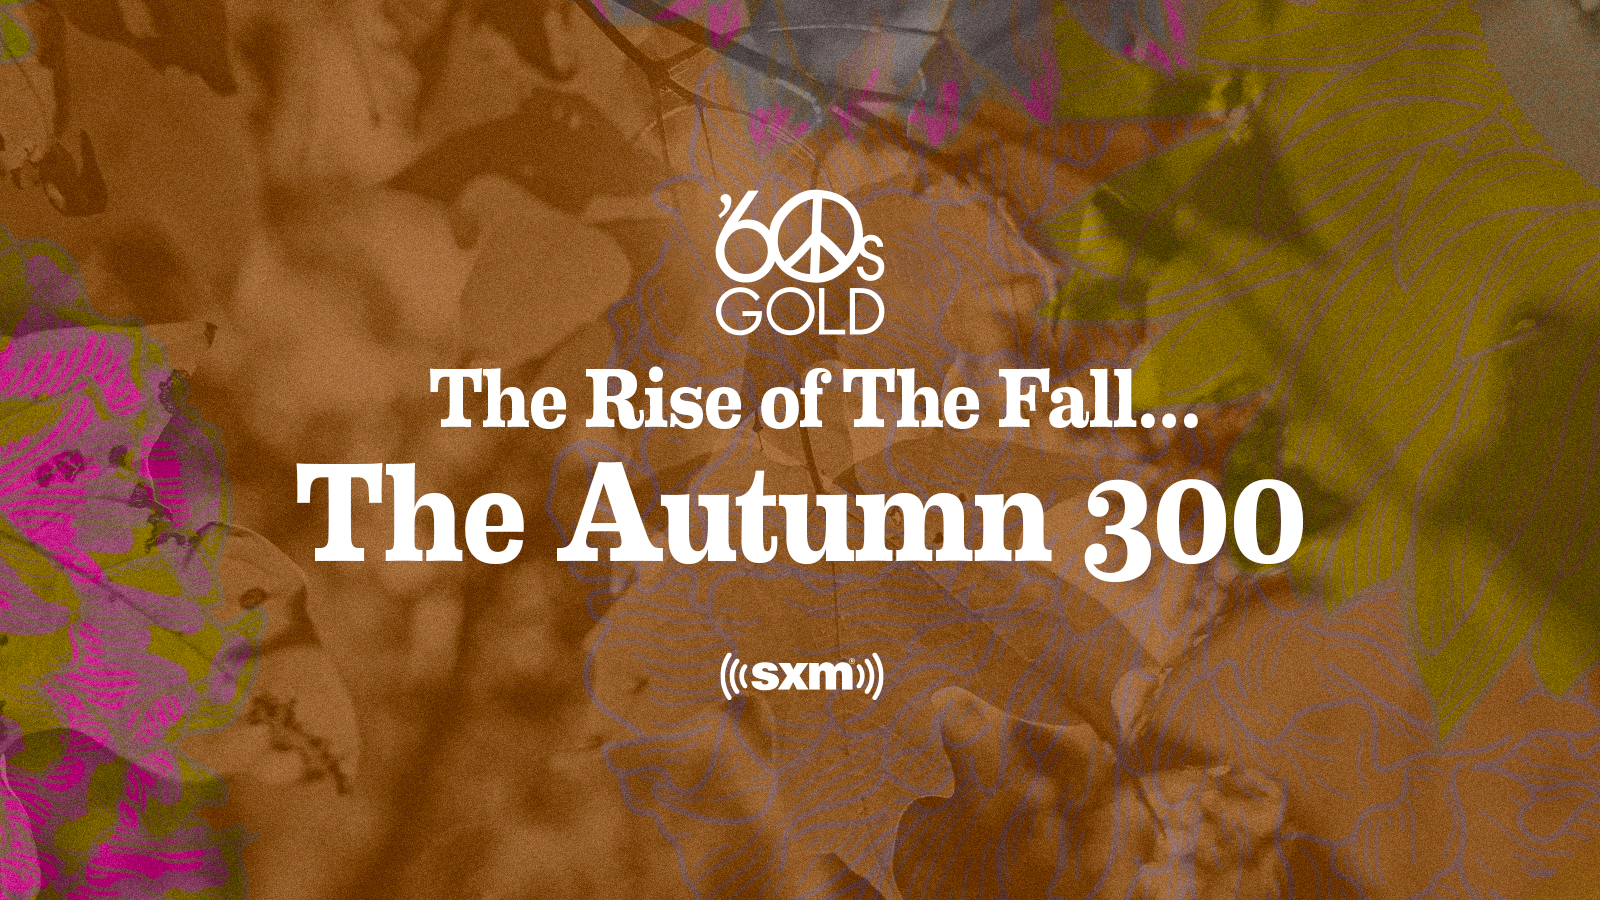 SiriusXM 60s Gold Autumn 300